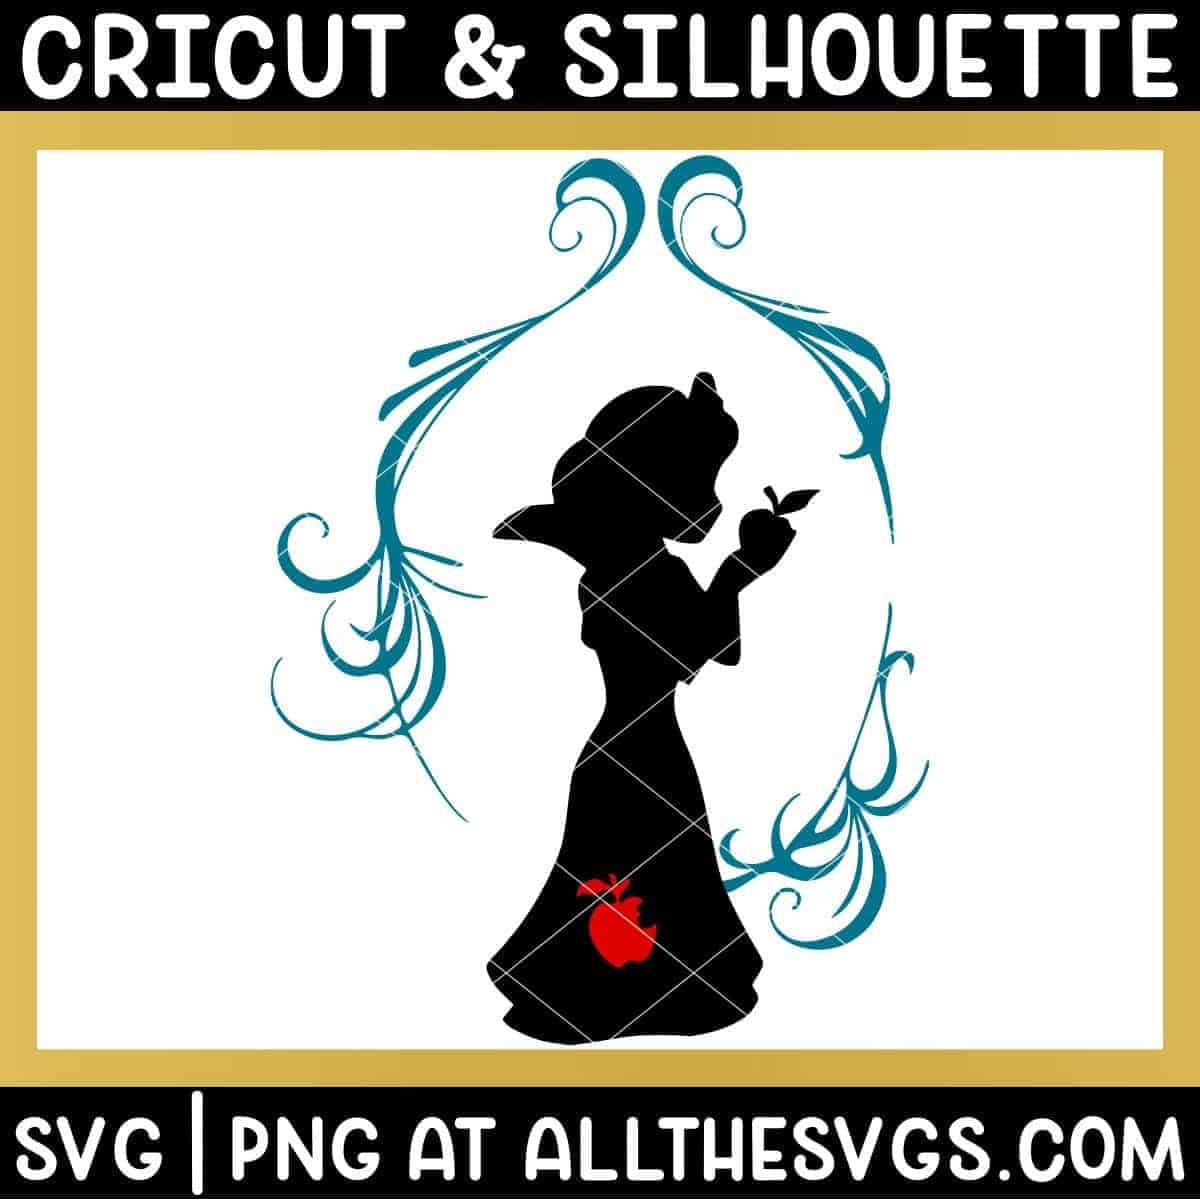 disney princess silhouettes clip art